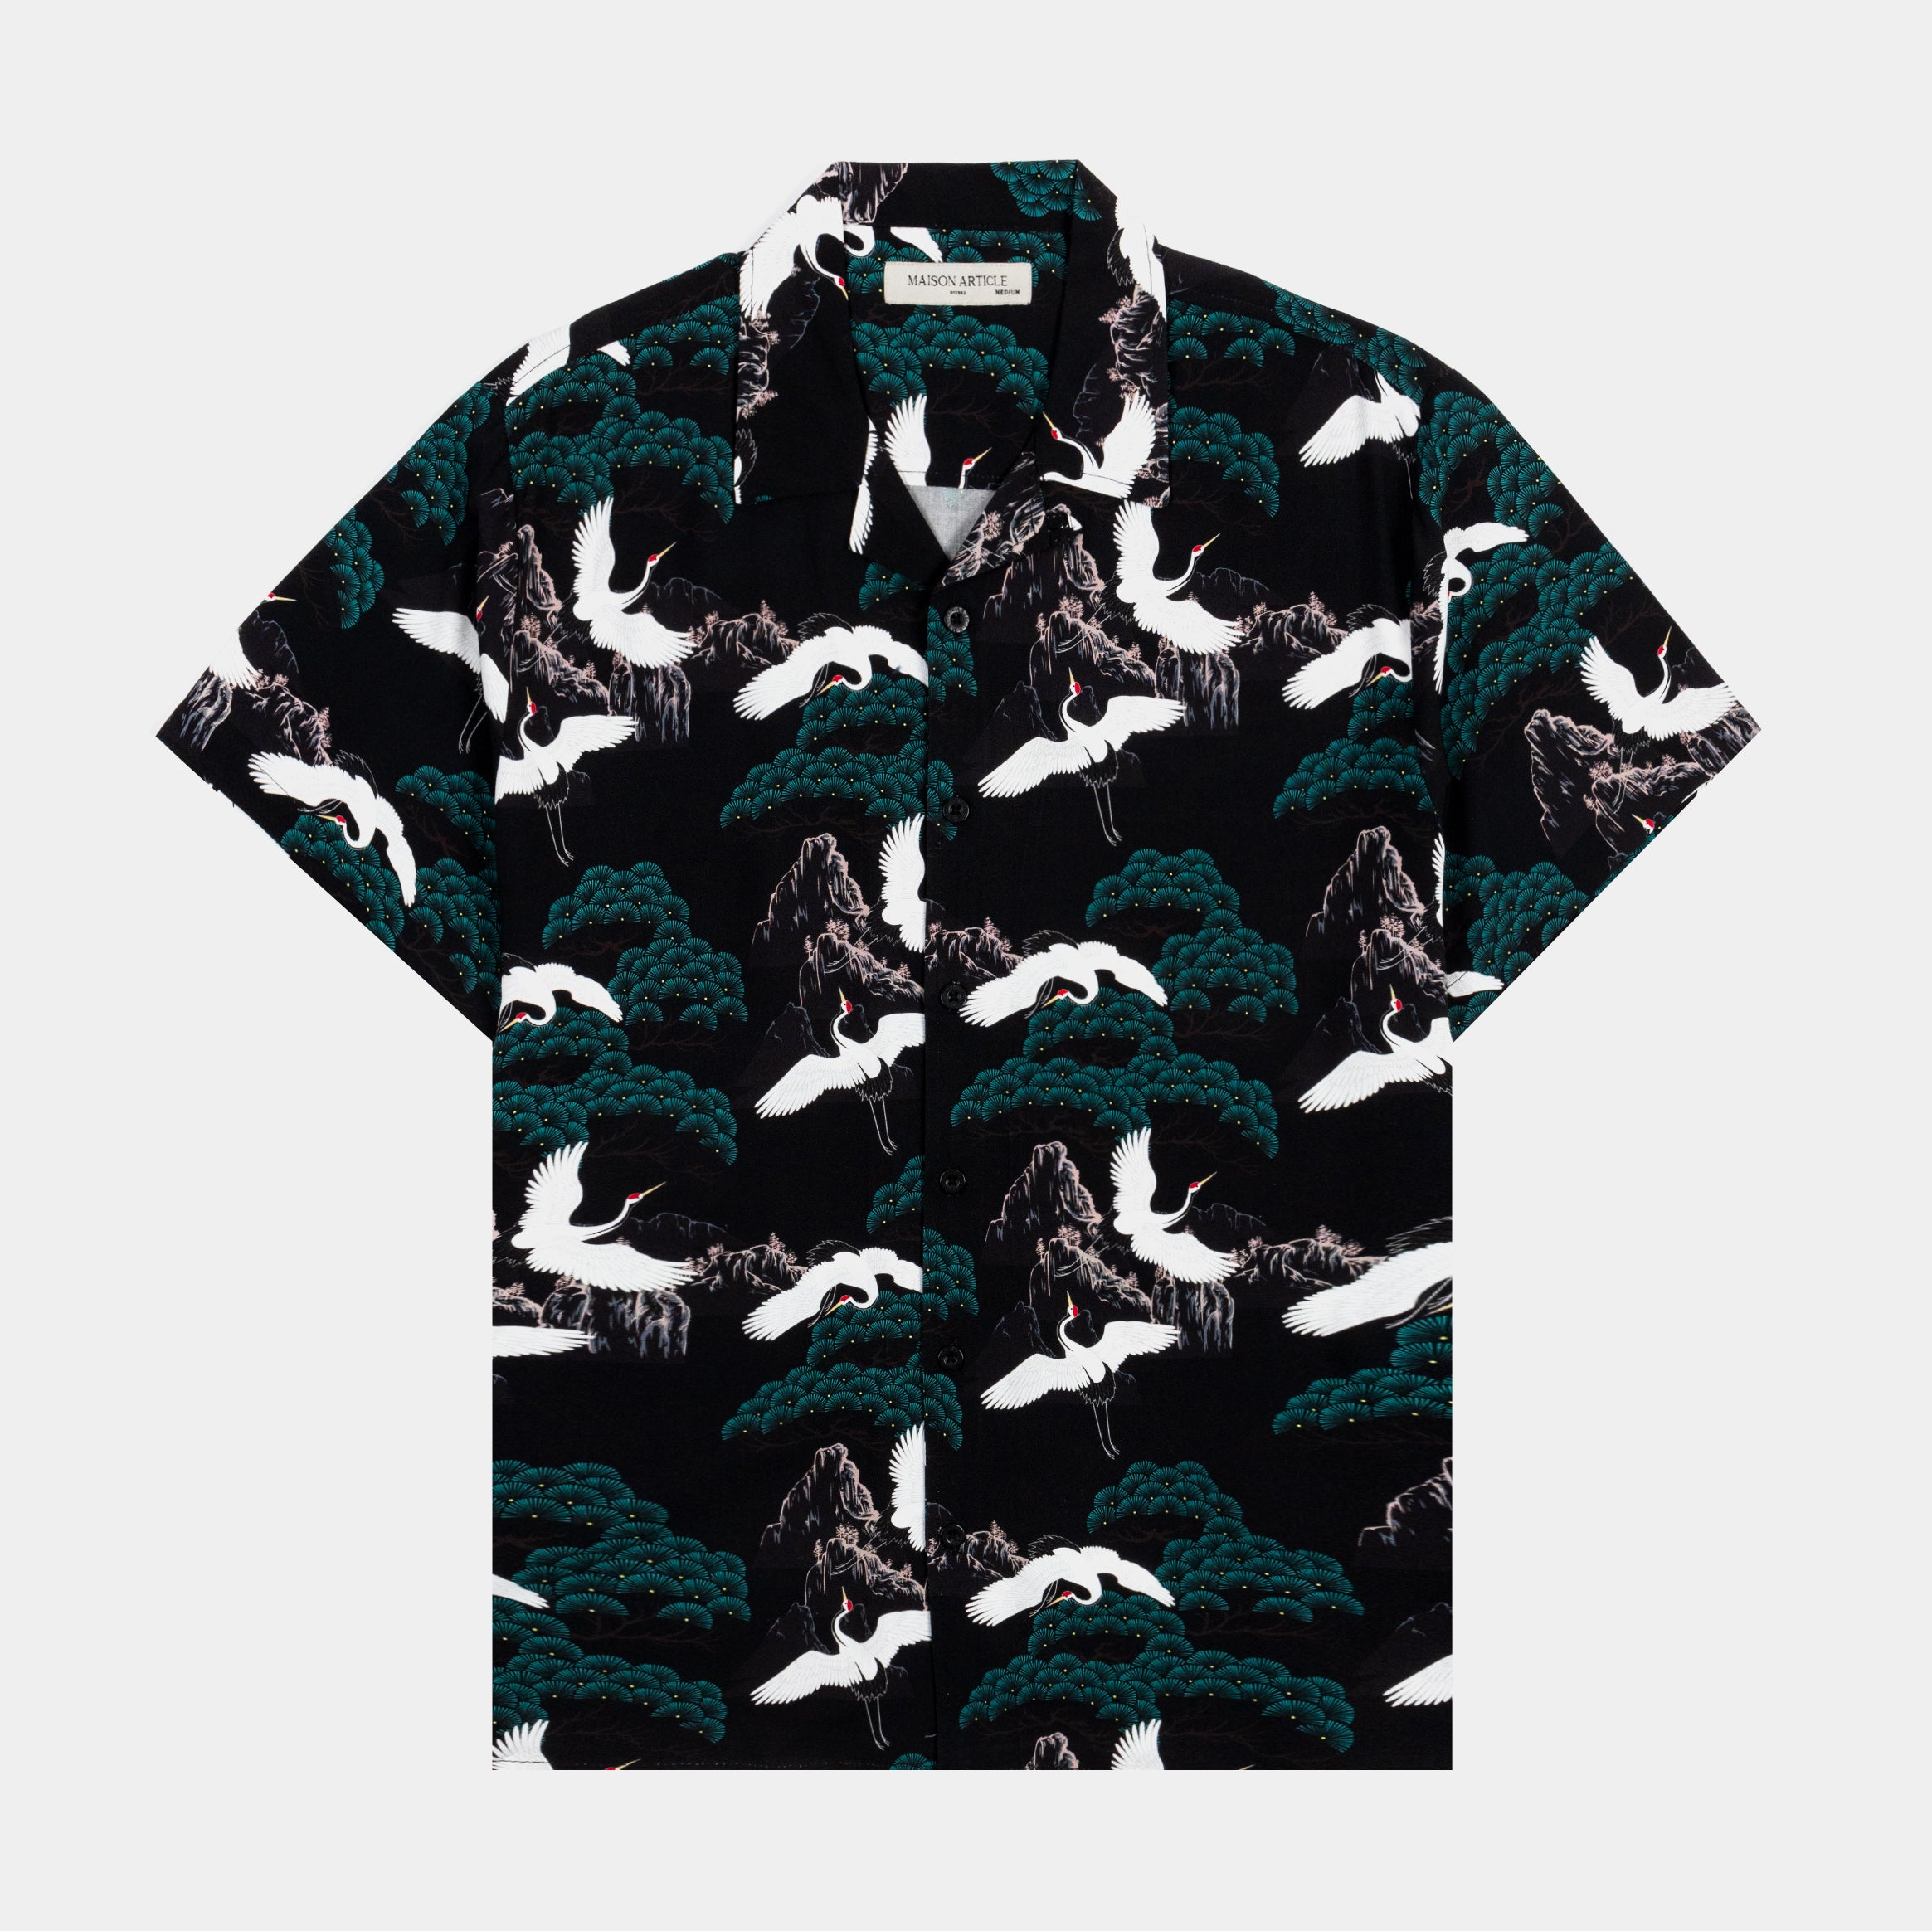 Flying Cranes Woven Rayon Mens Short Sleeve Shirt (Black/Green